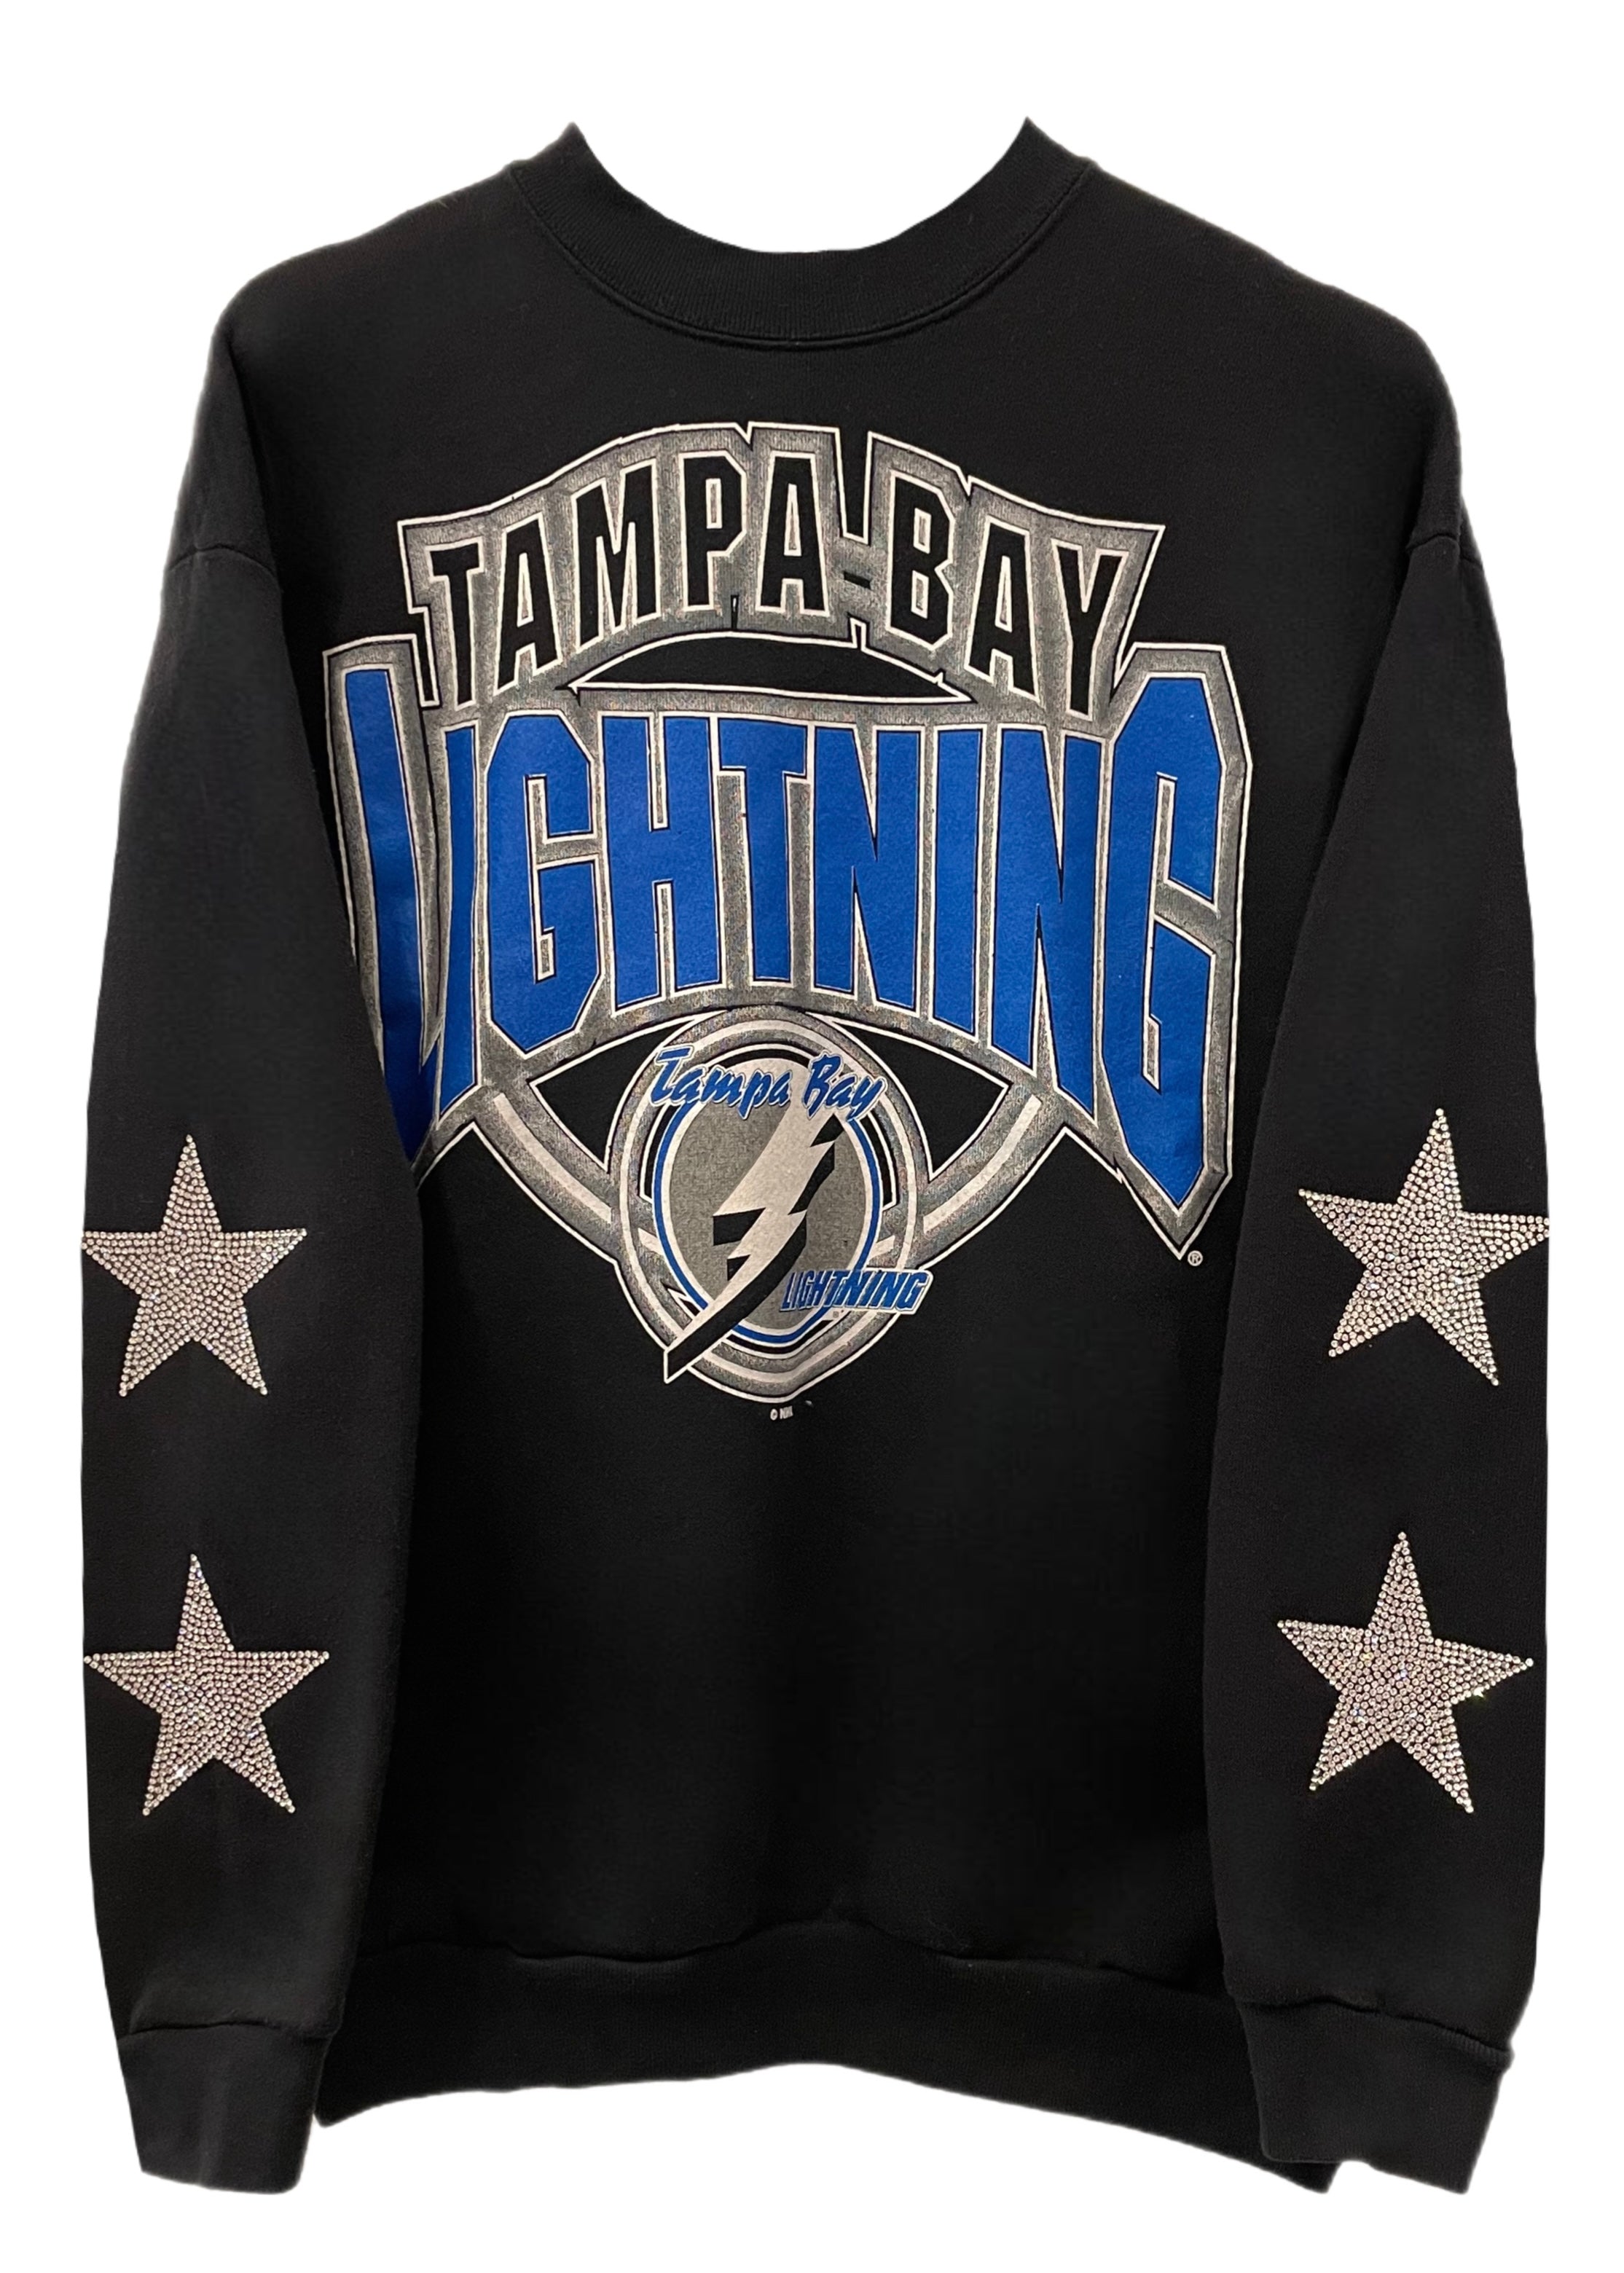 Tampa Lightning Sweatshirt 